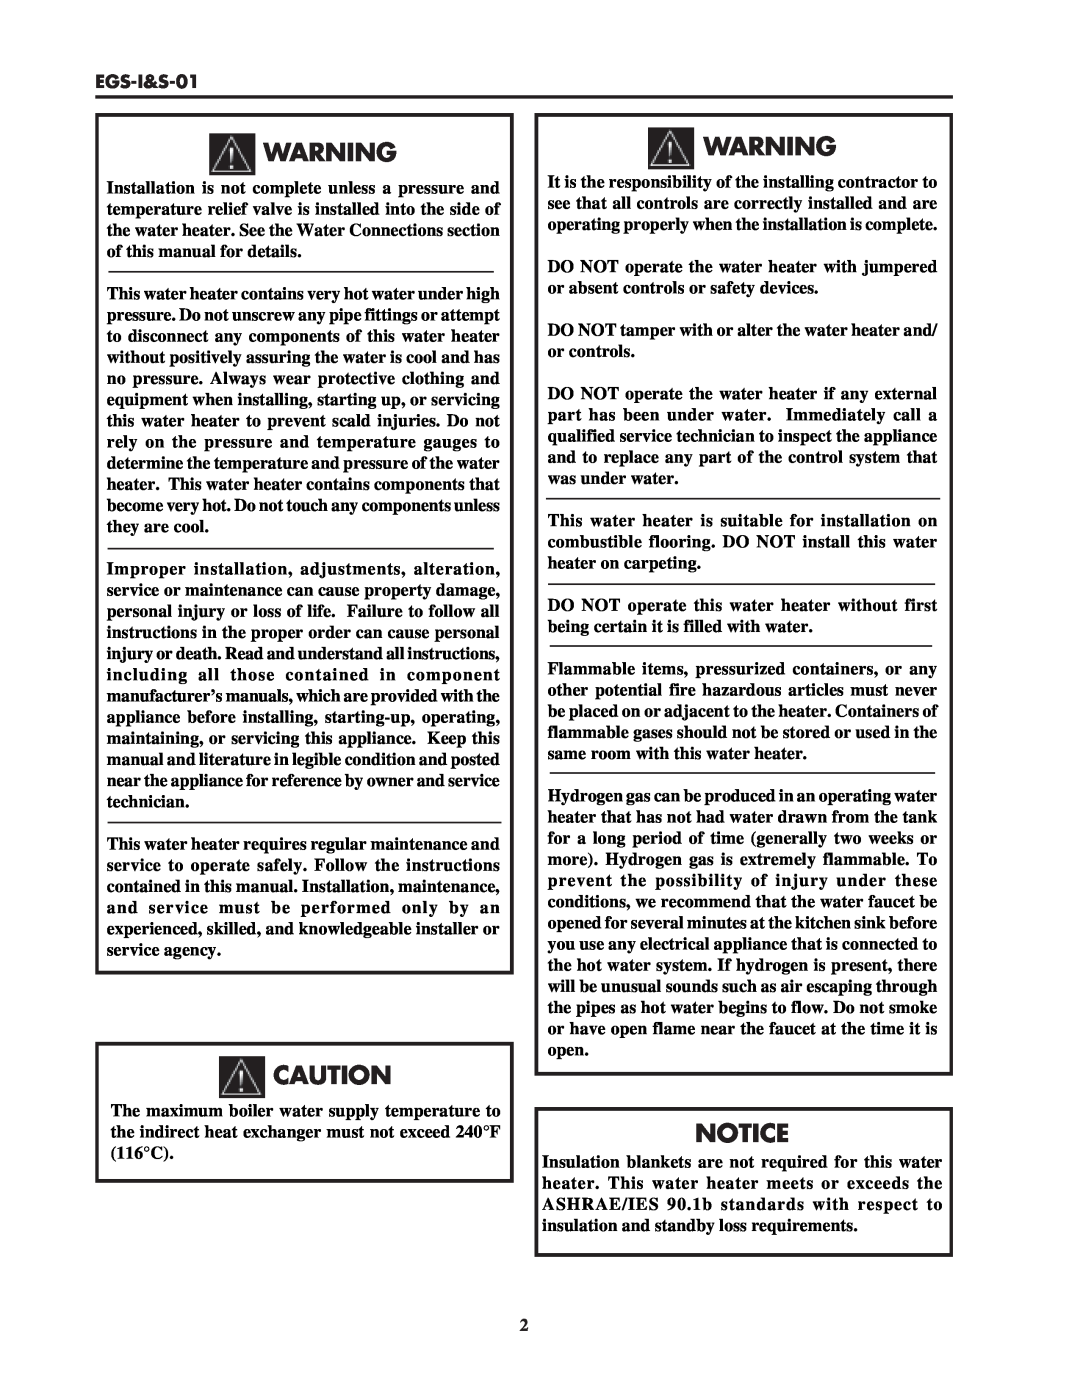 Lochinvar EGS-I&S-01 service manual 